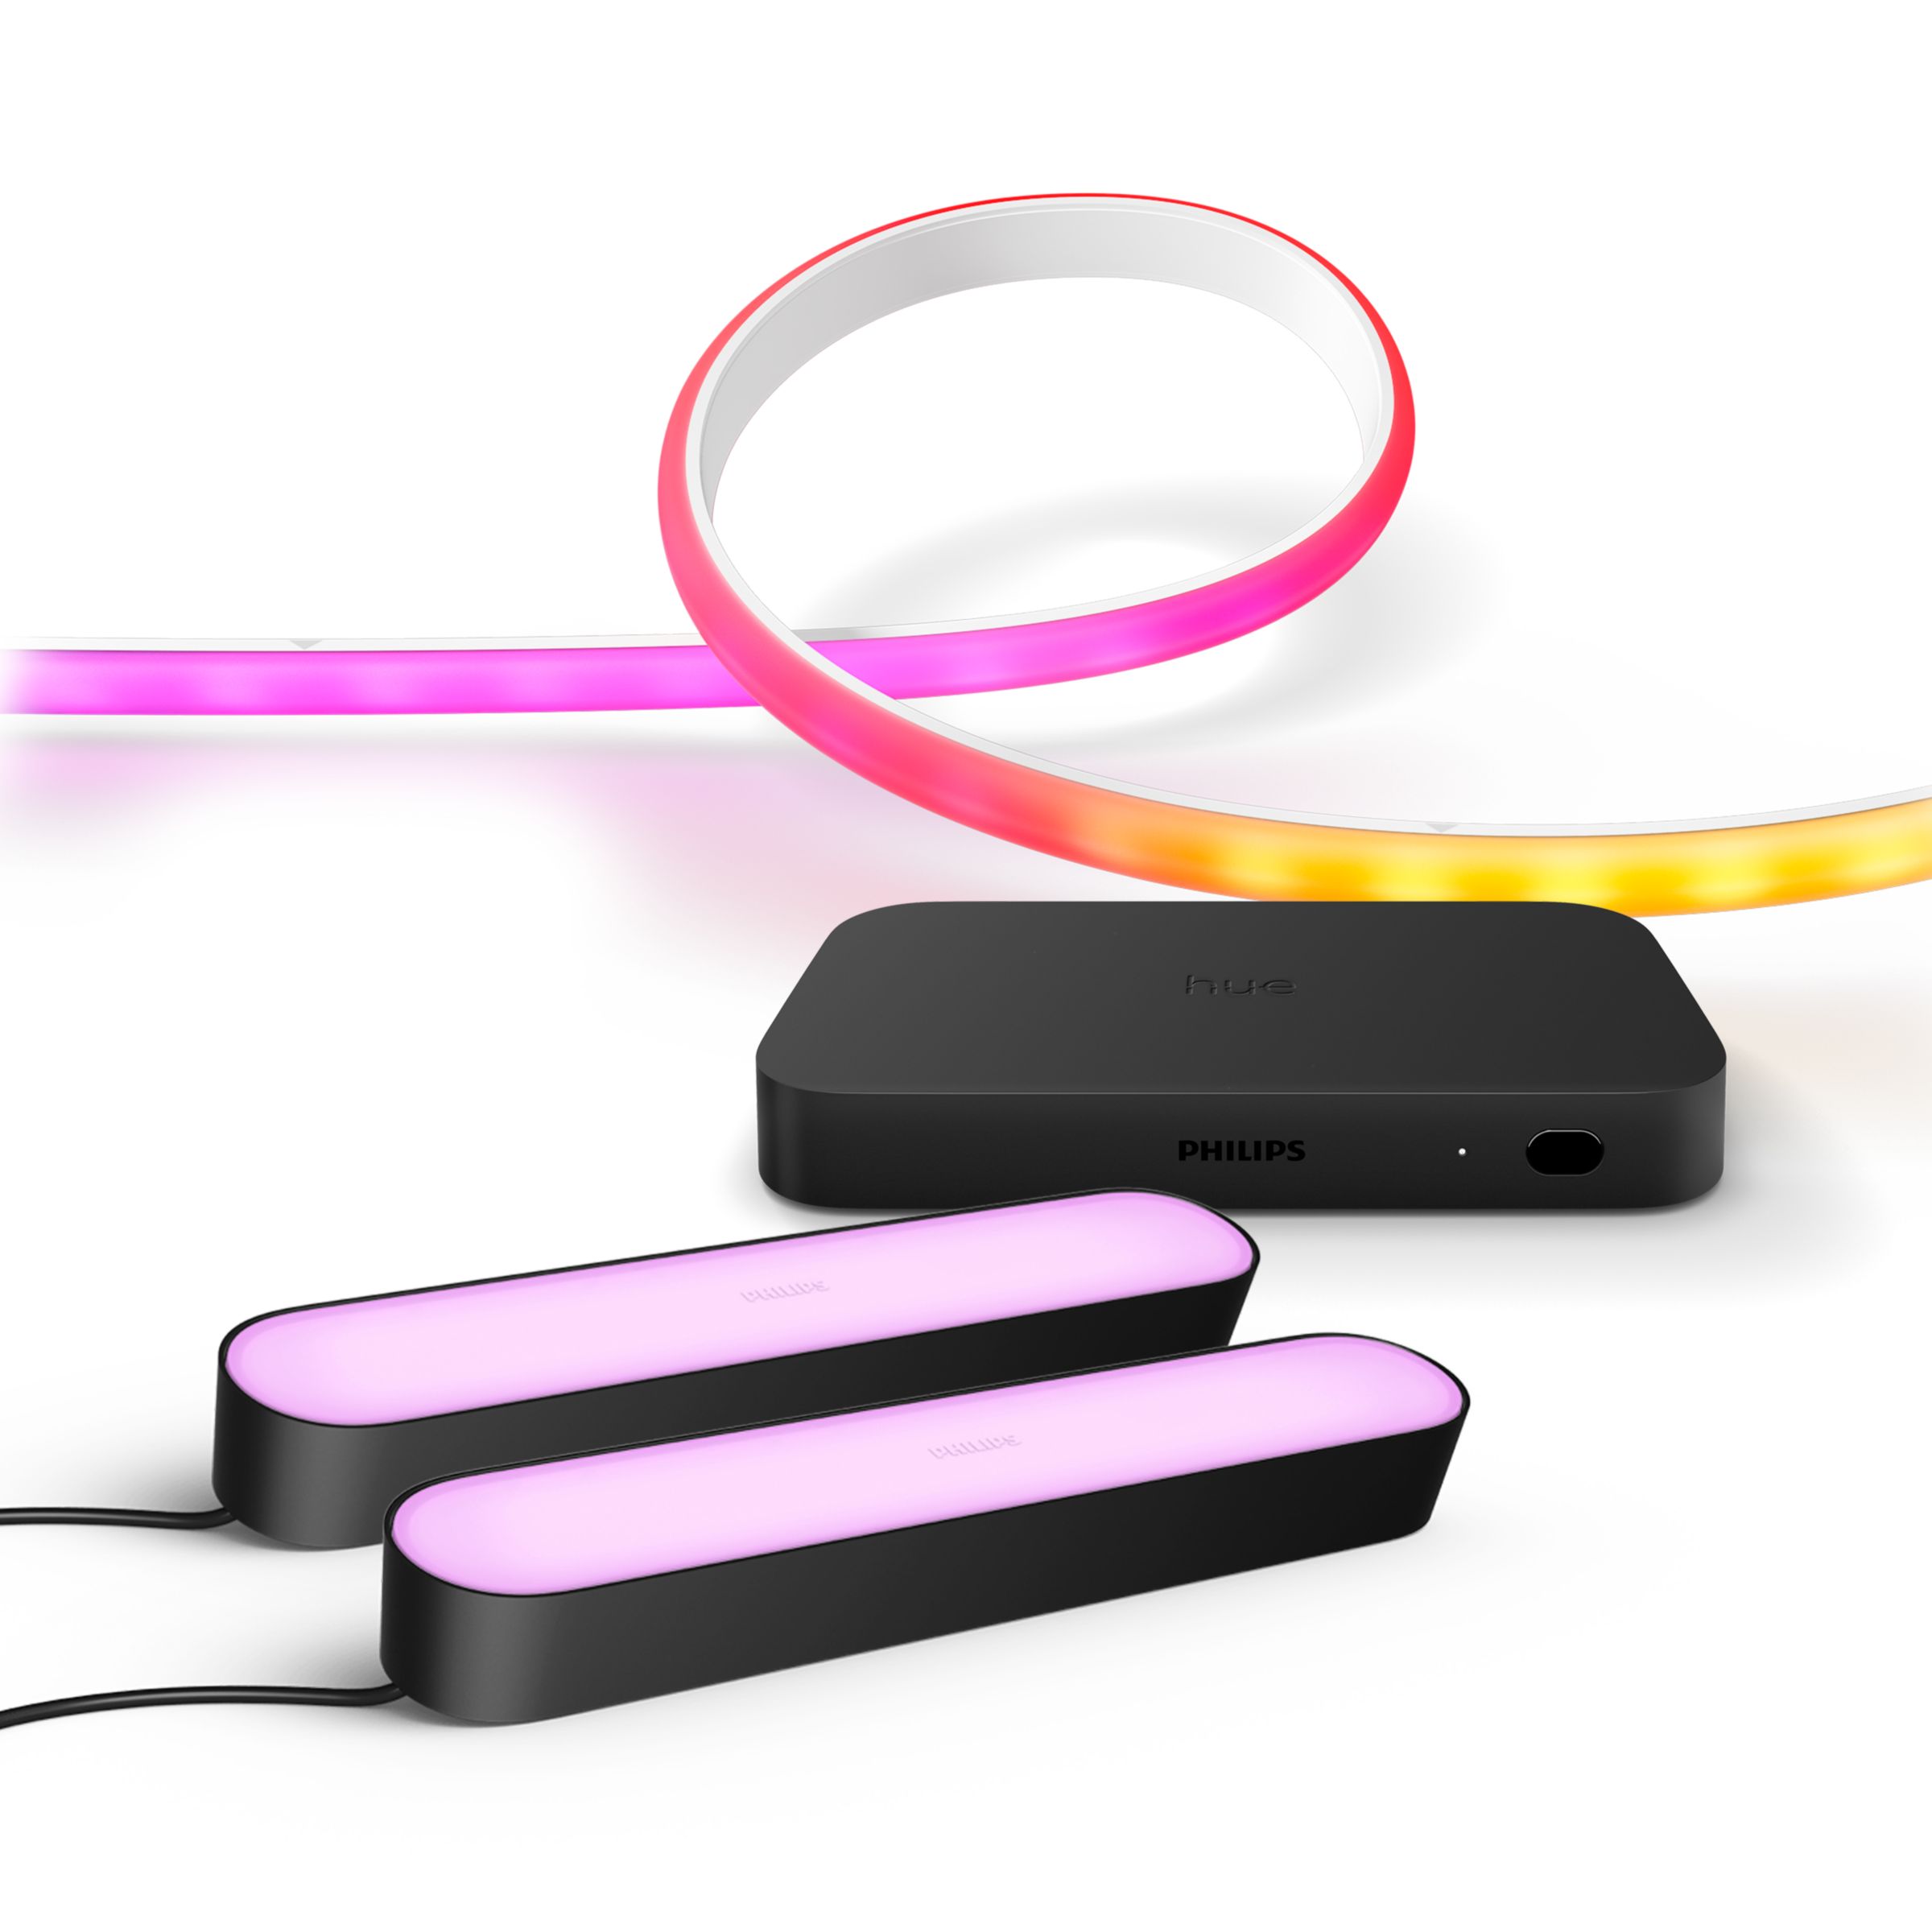 Philips Paket: Hue sync box + 2 Play ljusskena + ambiance gradient lightstrip